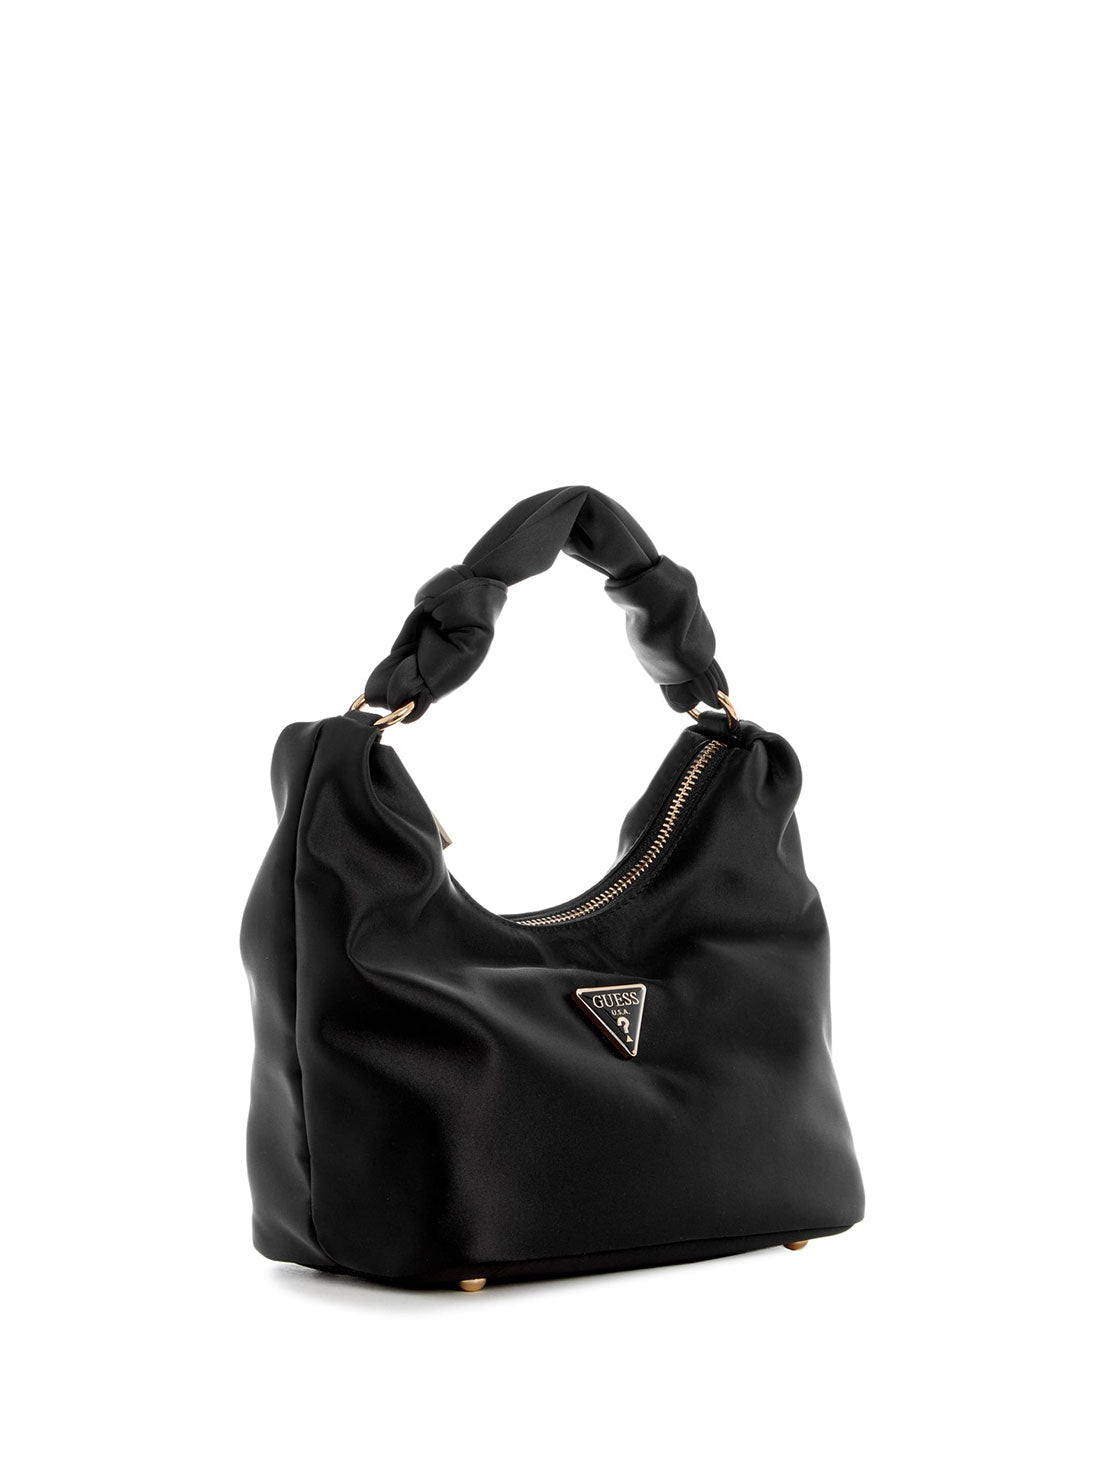 GUESS Women's Black Velina Hobo Bag EG876502 Angle View